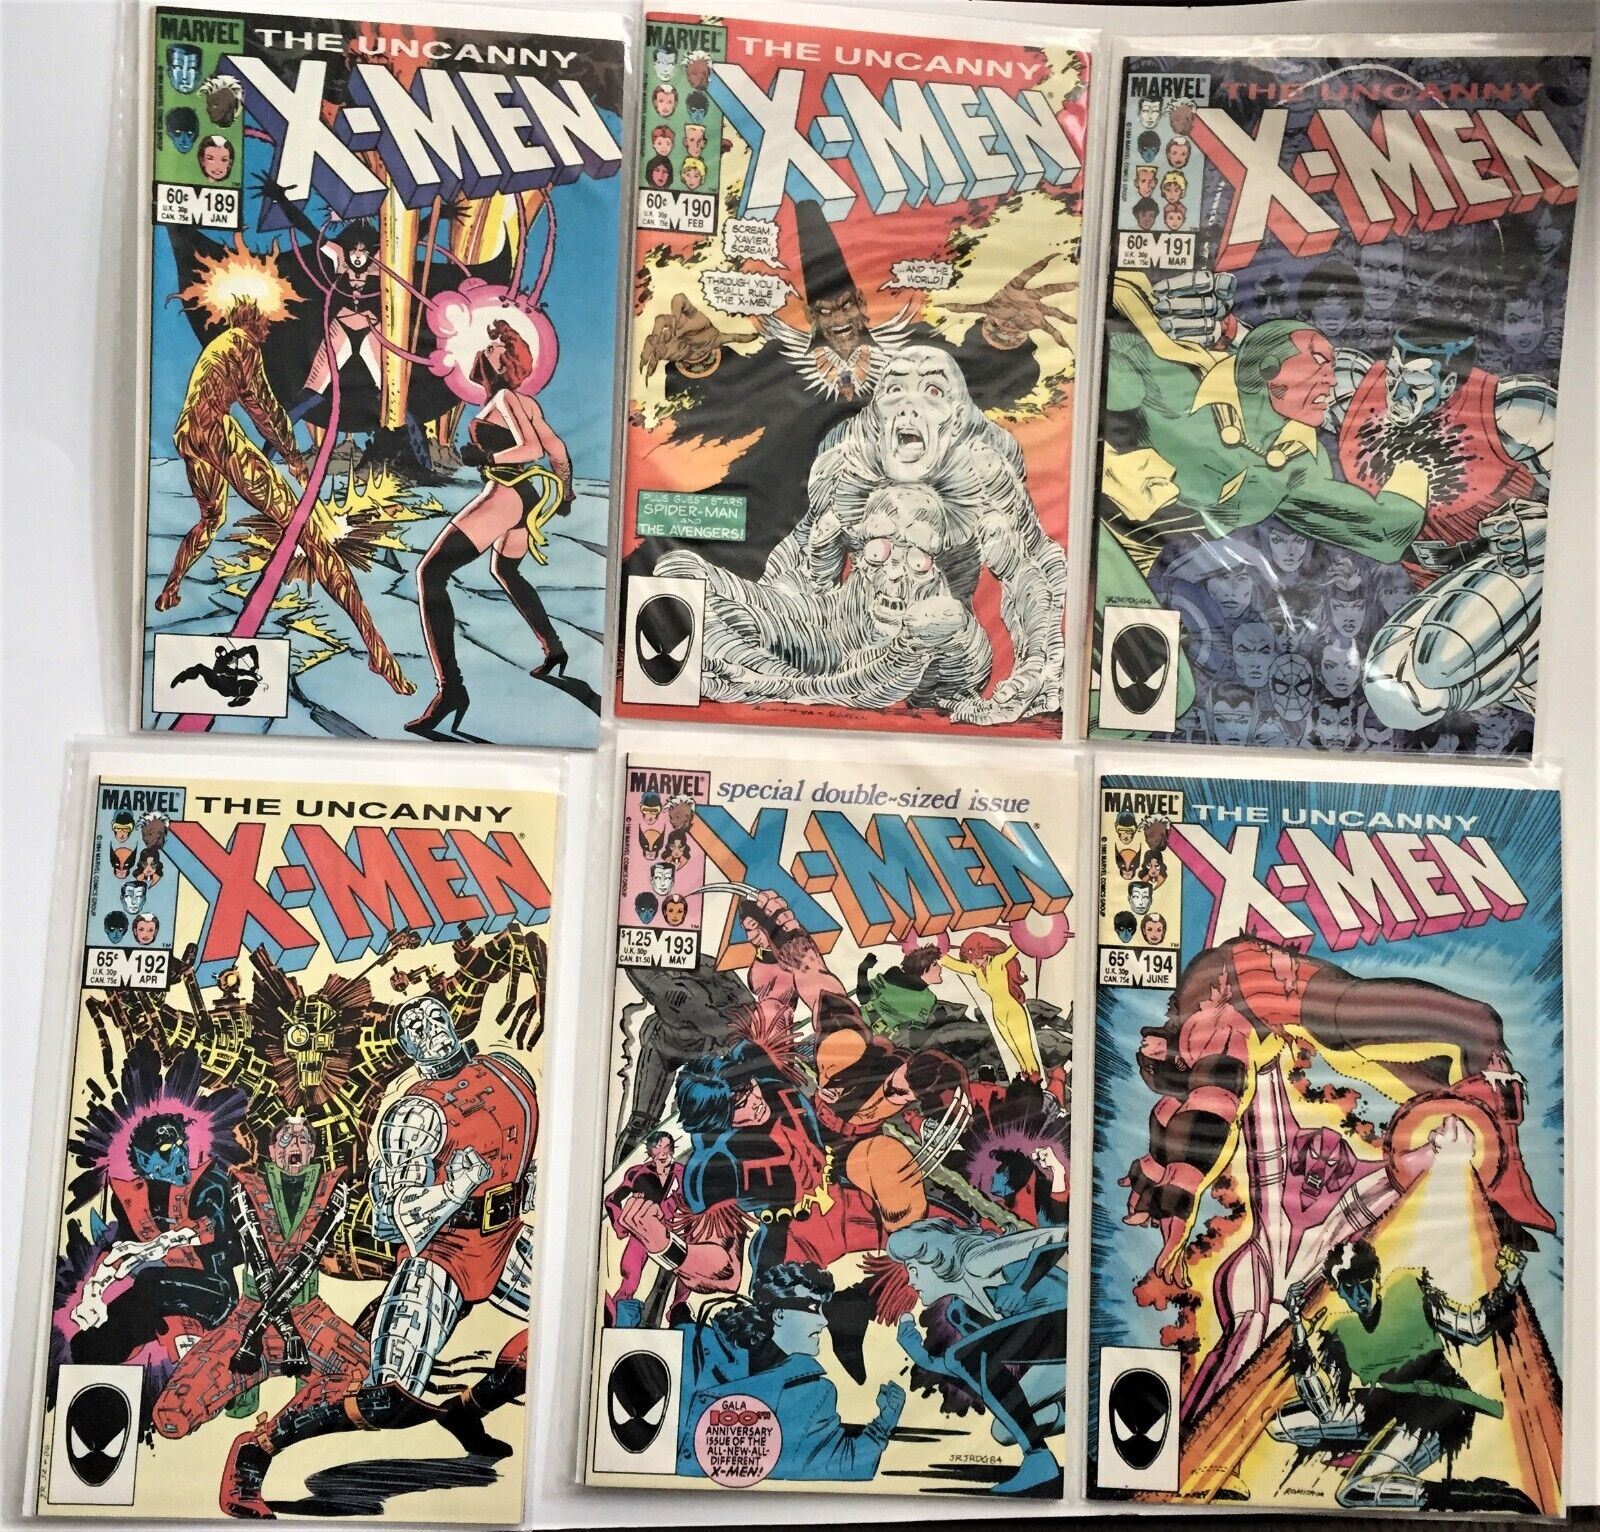 Uncanny X-Men (1963) #189-200, Full 12 Issue Run, high grade copies